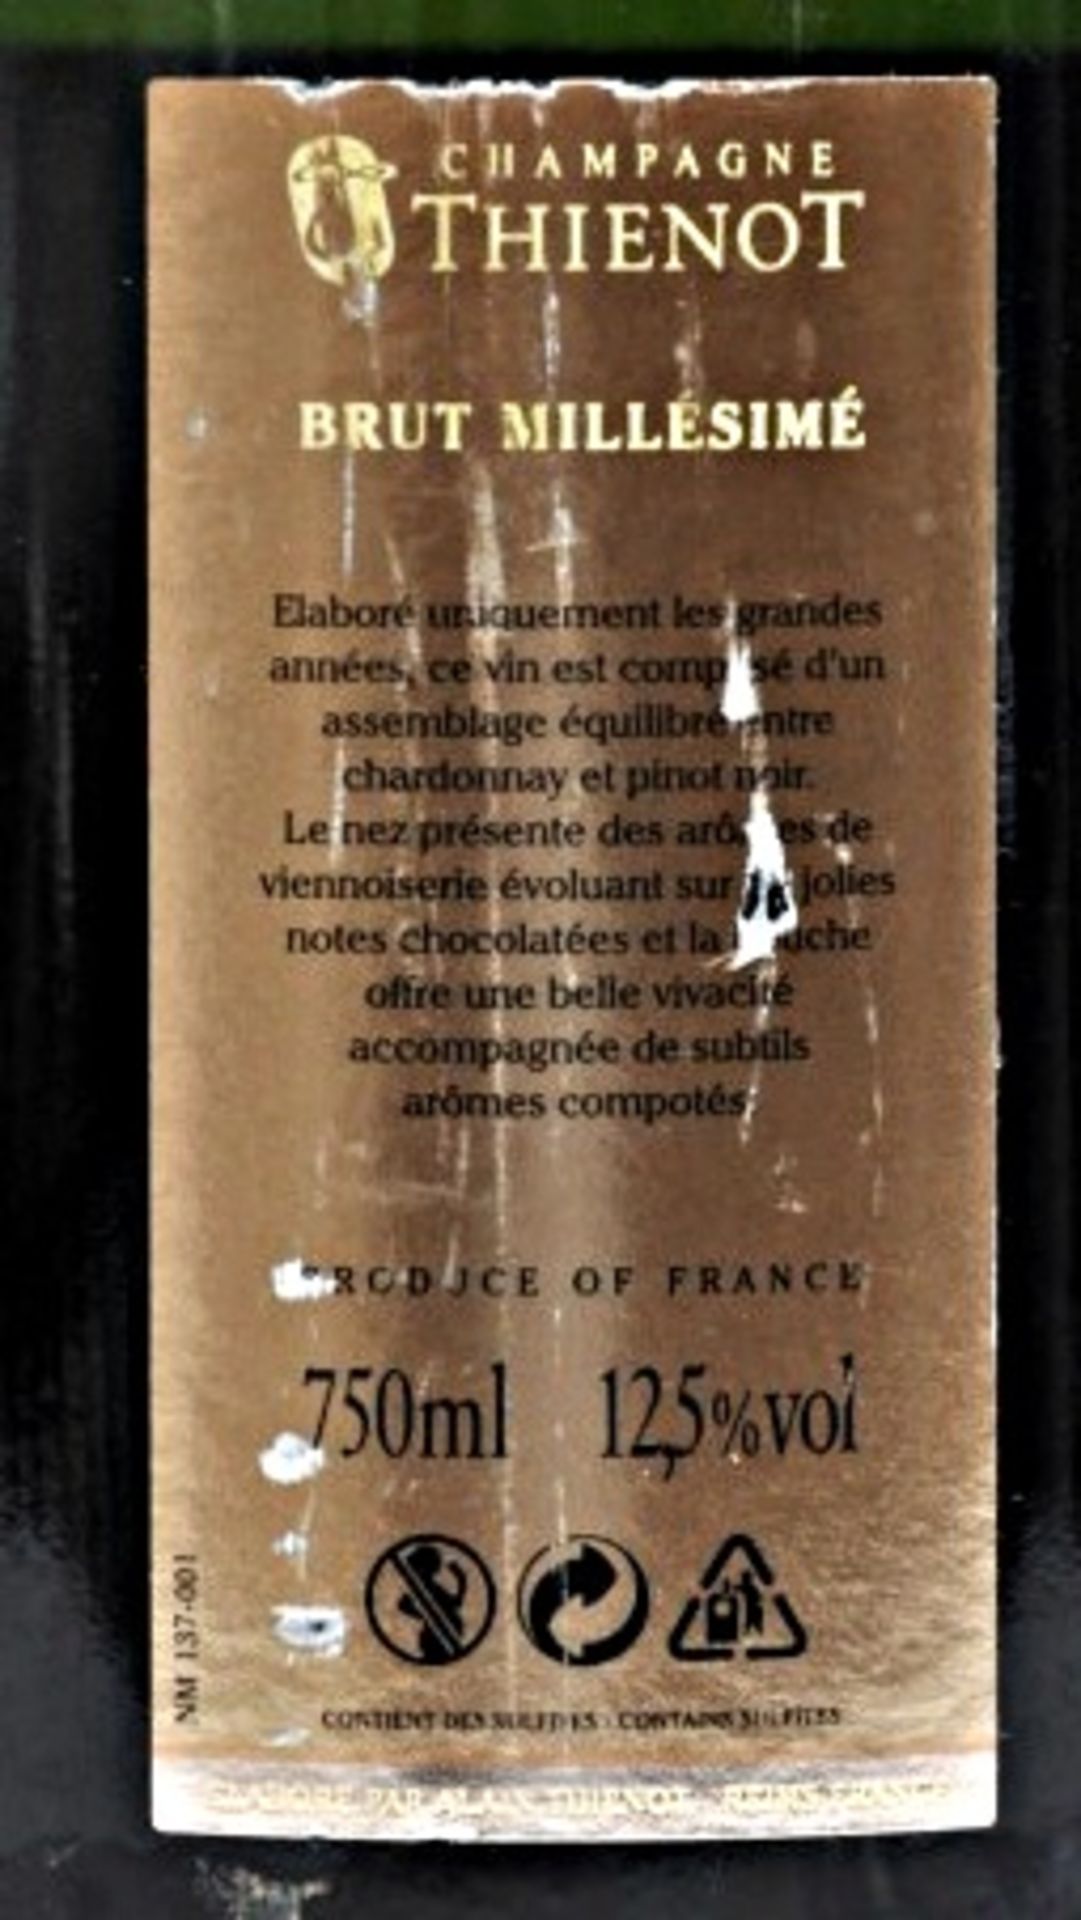 1 x Thienot Brut, Champagne, France – Bottle Size 75cl – 2000 – Volume 12.5% - Ref W1209 - CL101 - - Image 4 of 4